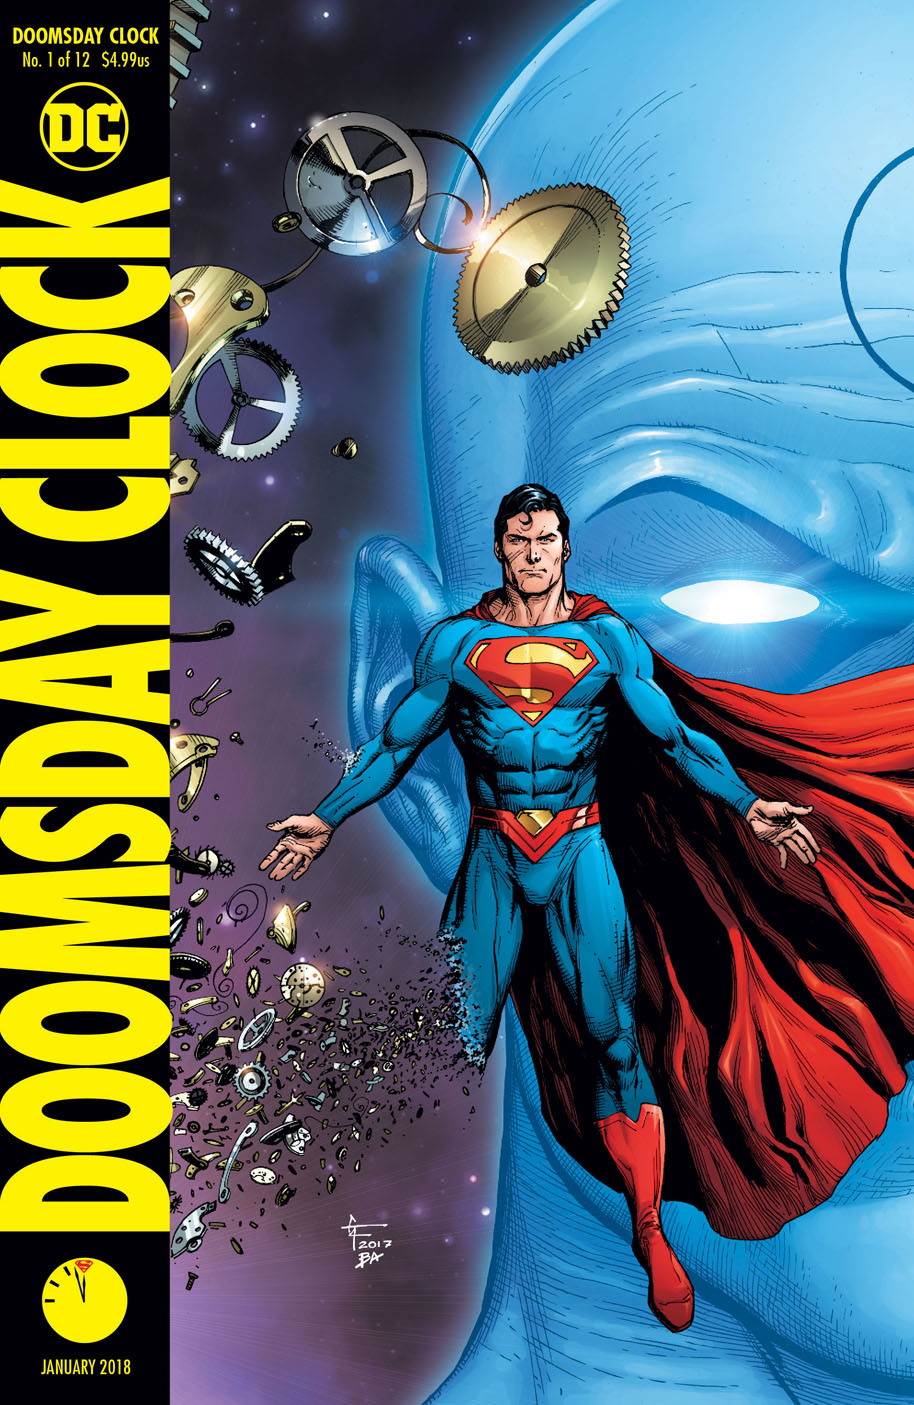 123 -  [DC COMICS] Publicaciones Universo DC: Discusión General v2 - Página 10 Variant-cover-of-doomsday-clock-1-with-superman-and-doctor-manhattan